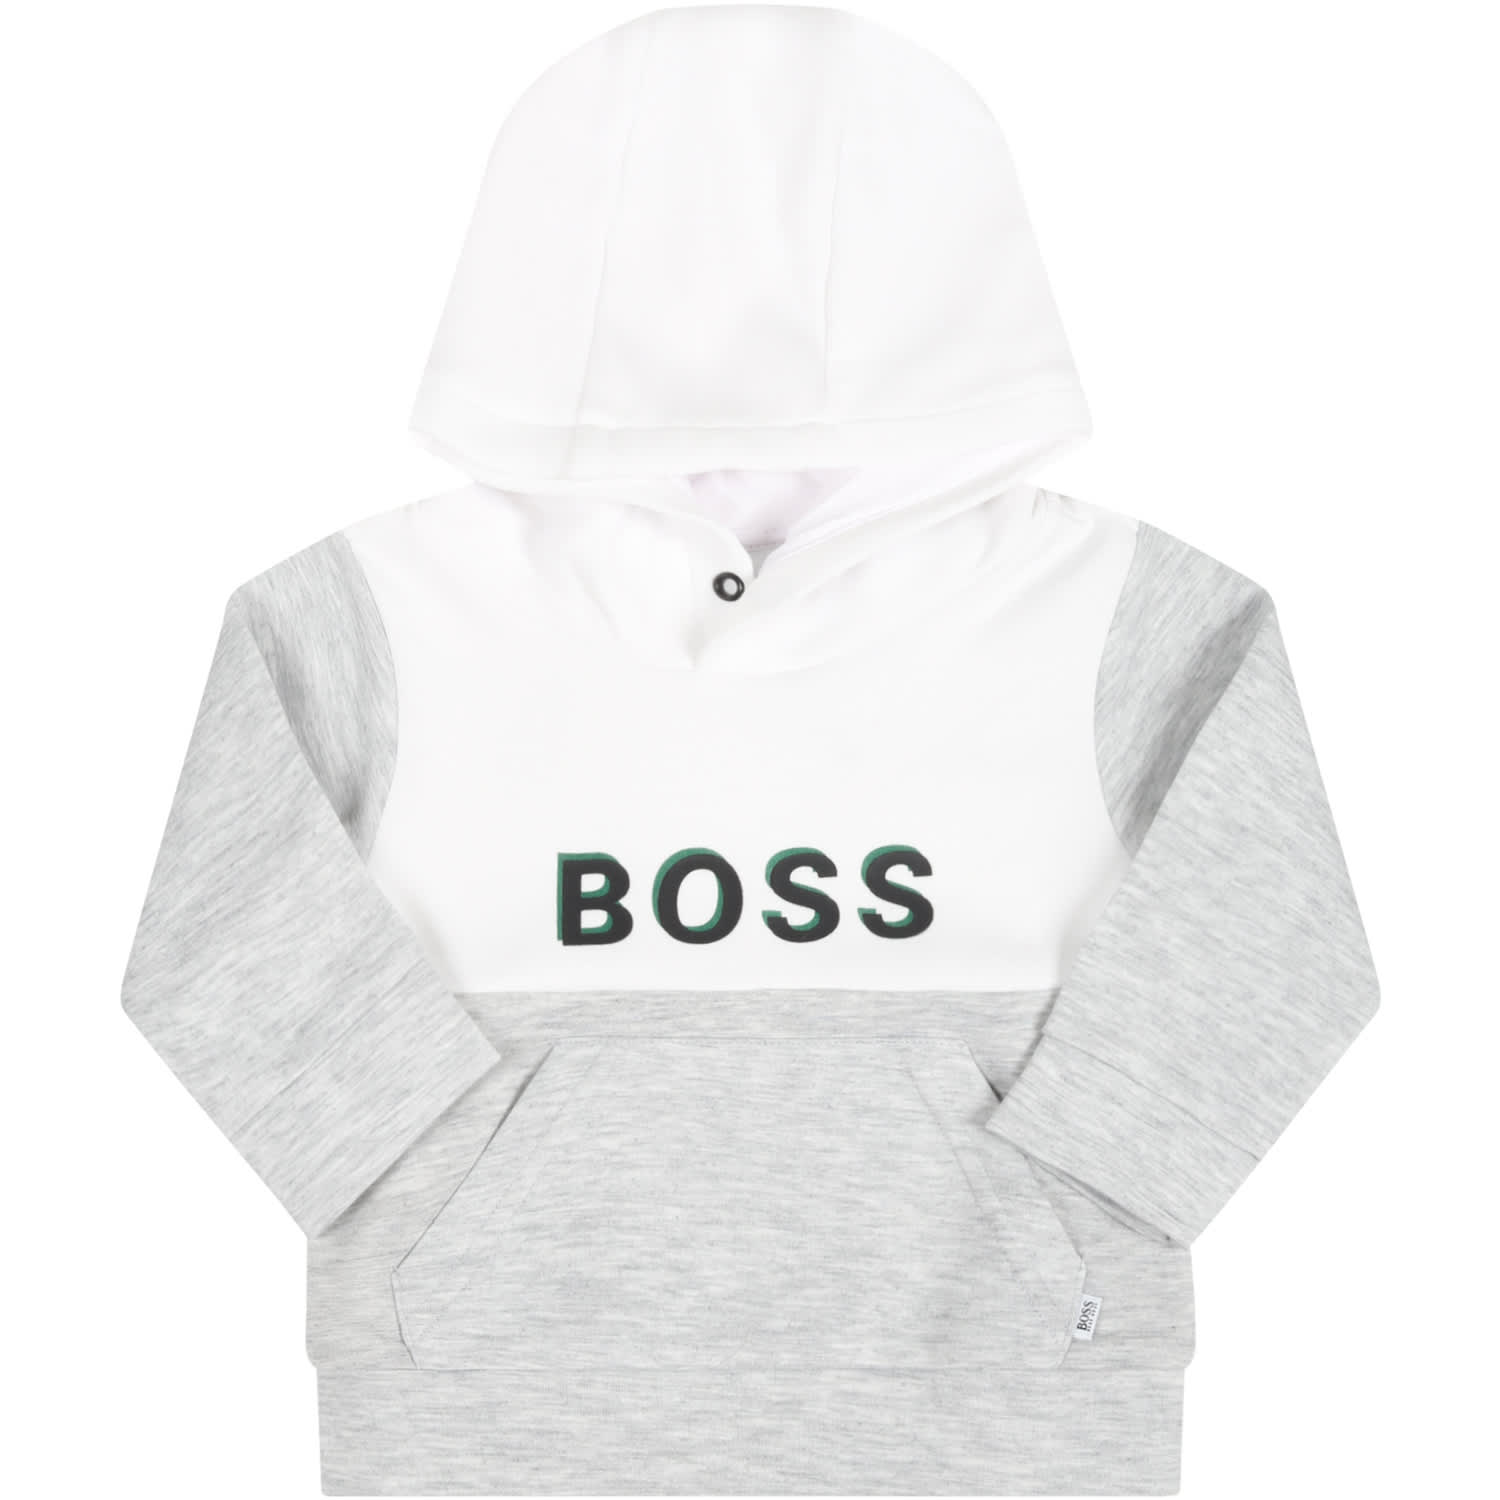 Hugo Boss Multicolor Sweatshirt For Baby Boy With Logo